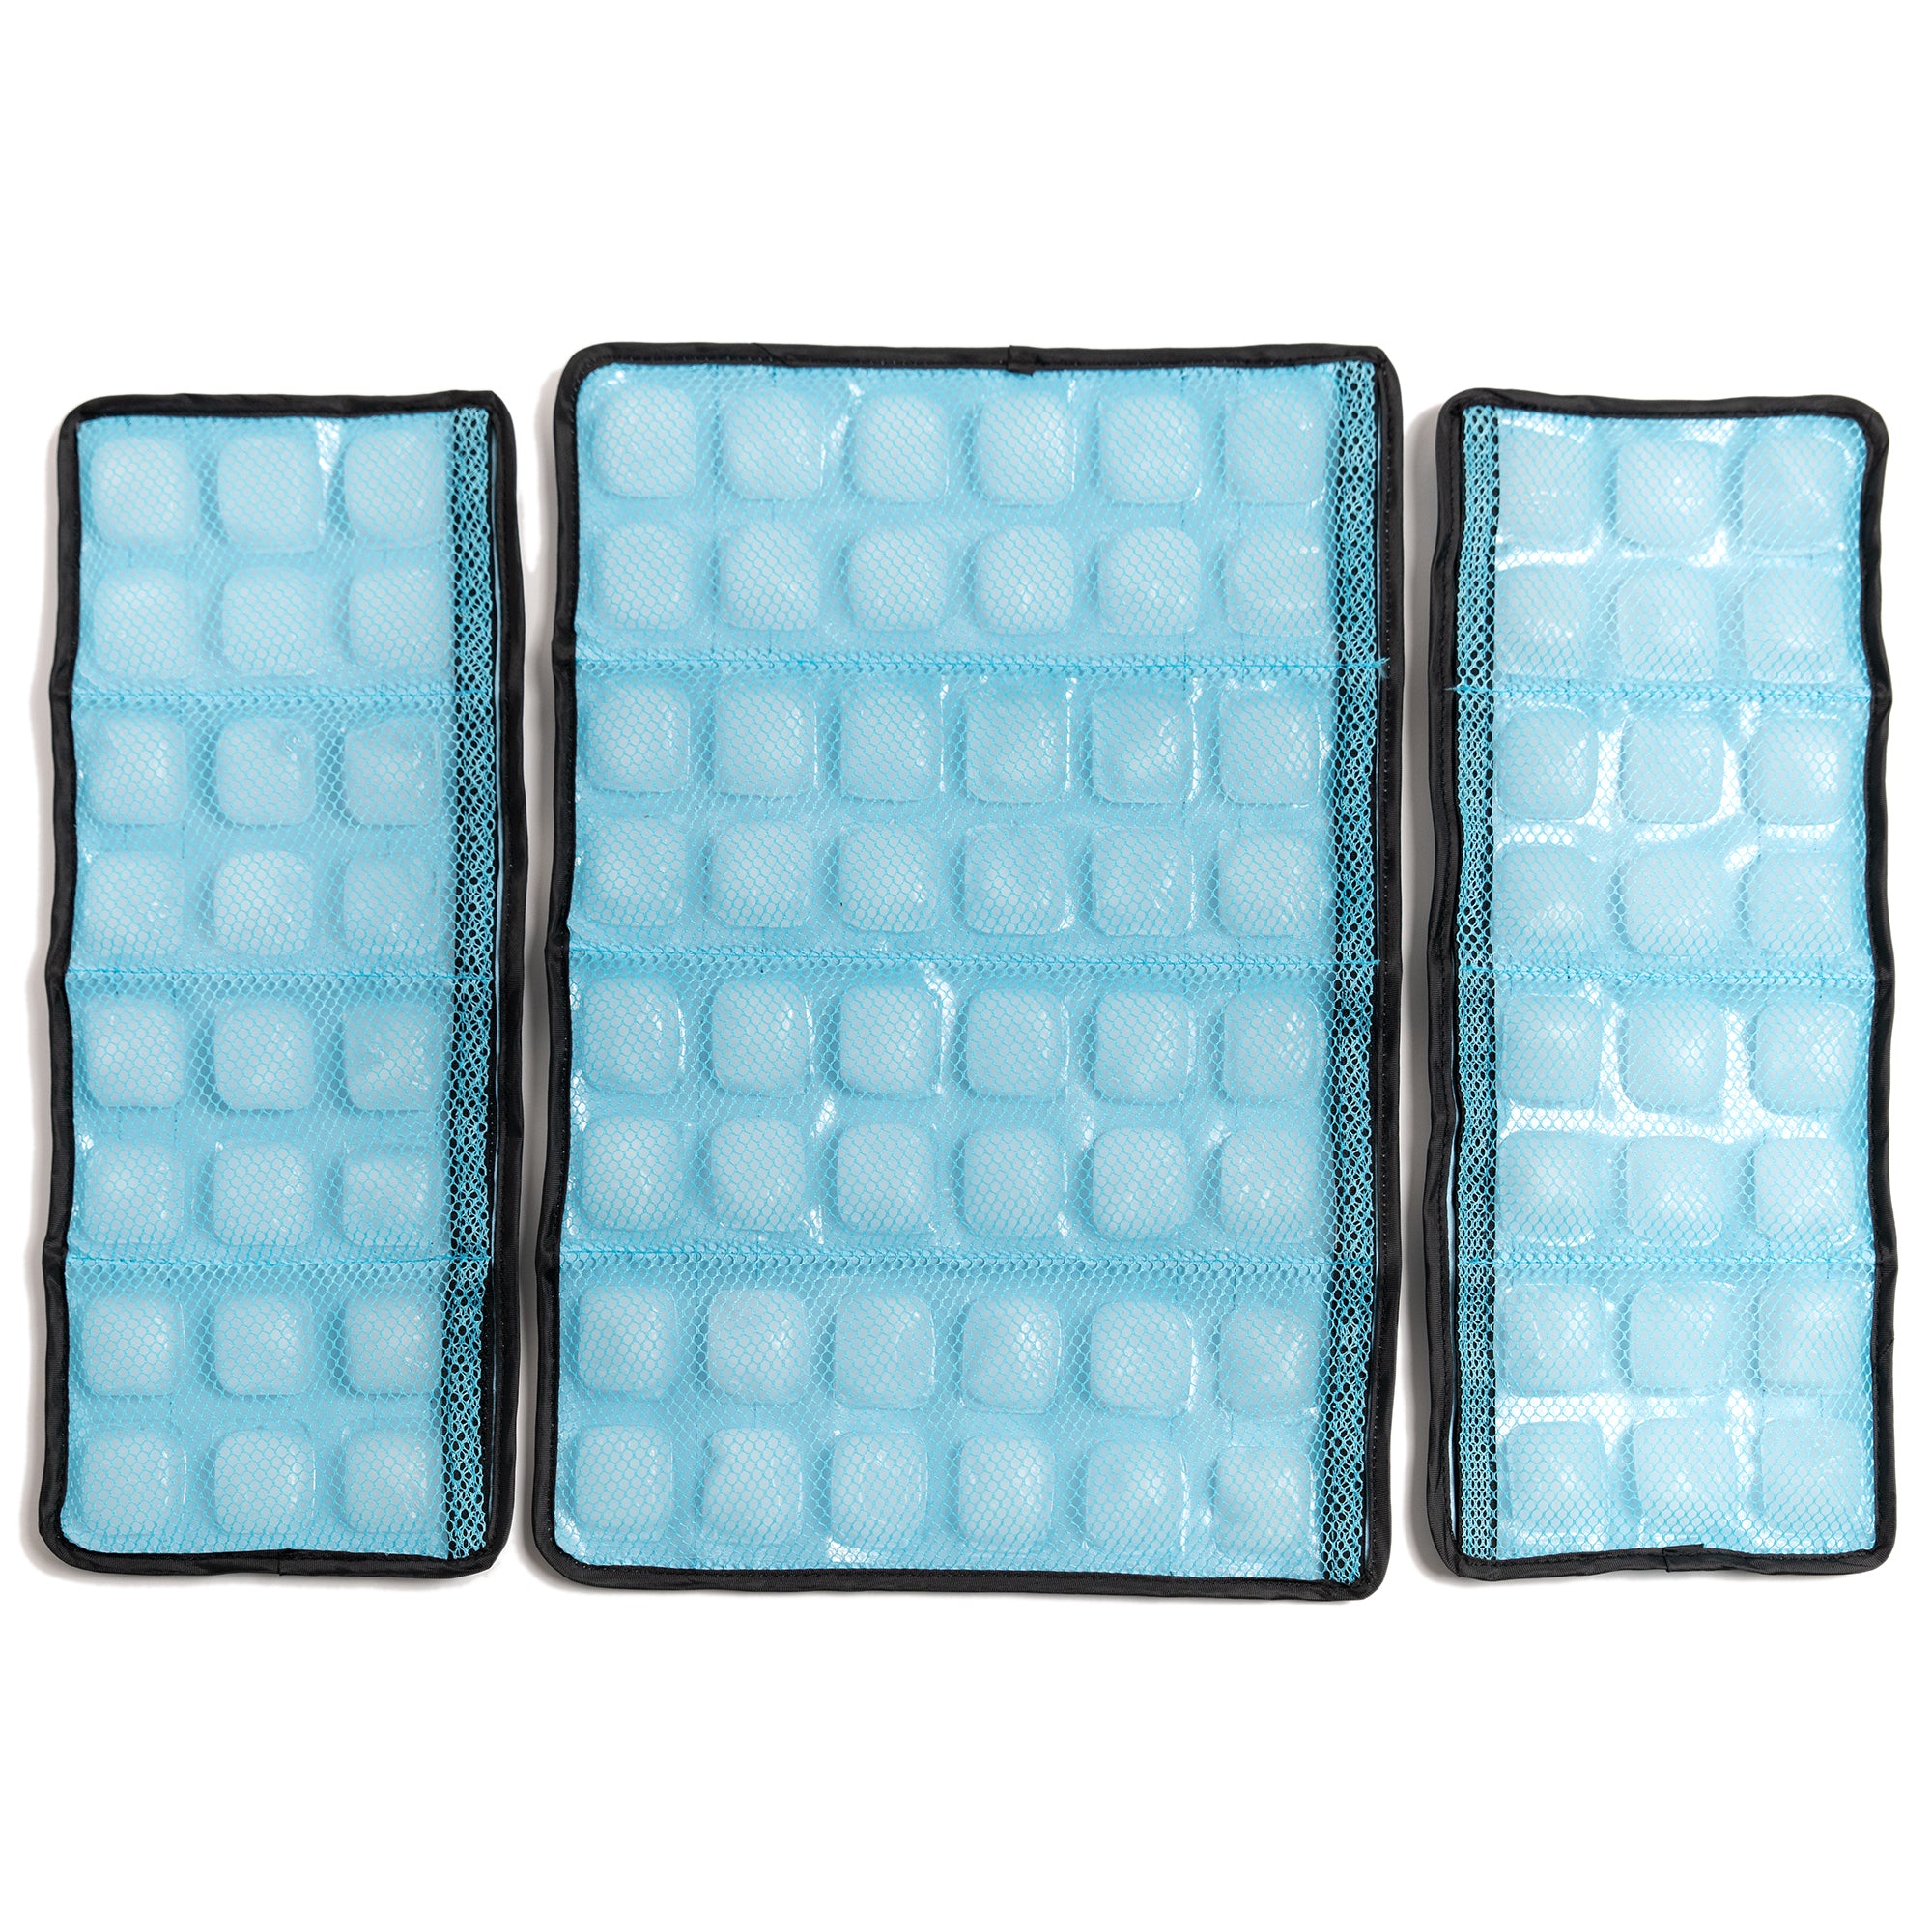 FlexiFreeze refreezable ice panels and mesh bag for FlexiFreeze professional cooling ice vest, black